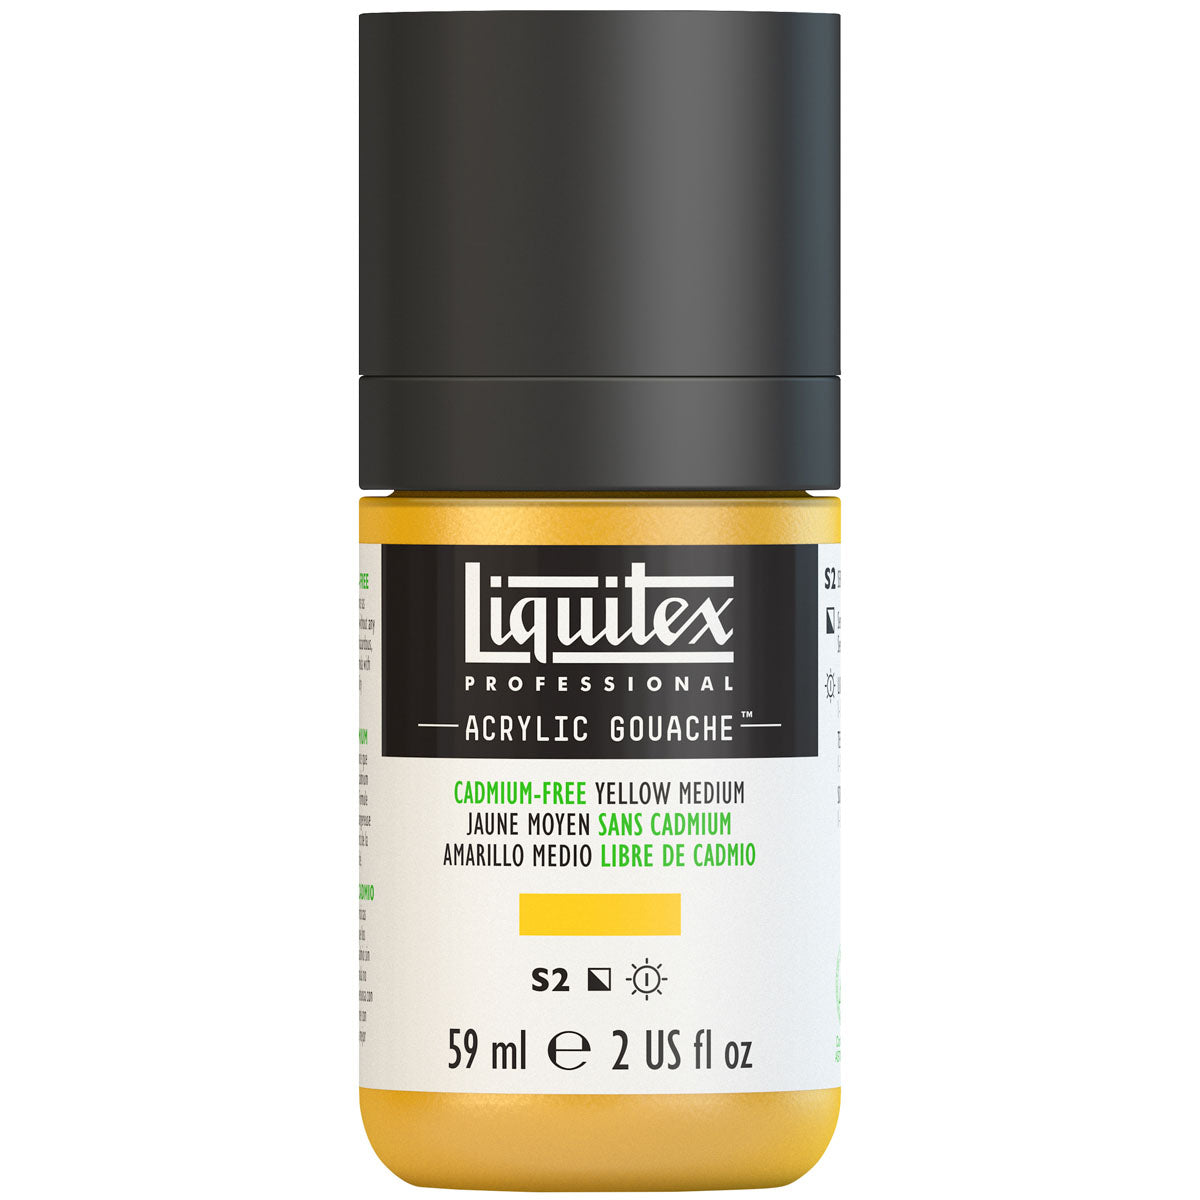 Liquitex - Acrylic Gouache 59ml S2 - Cadimum-Free Yellow Medium